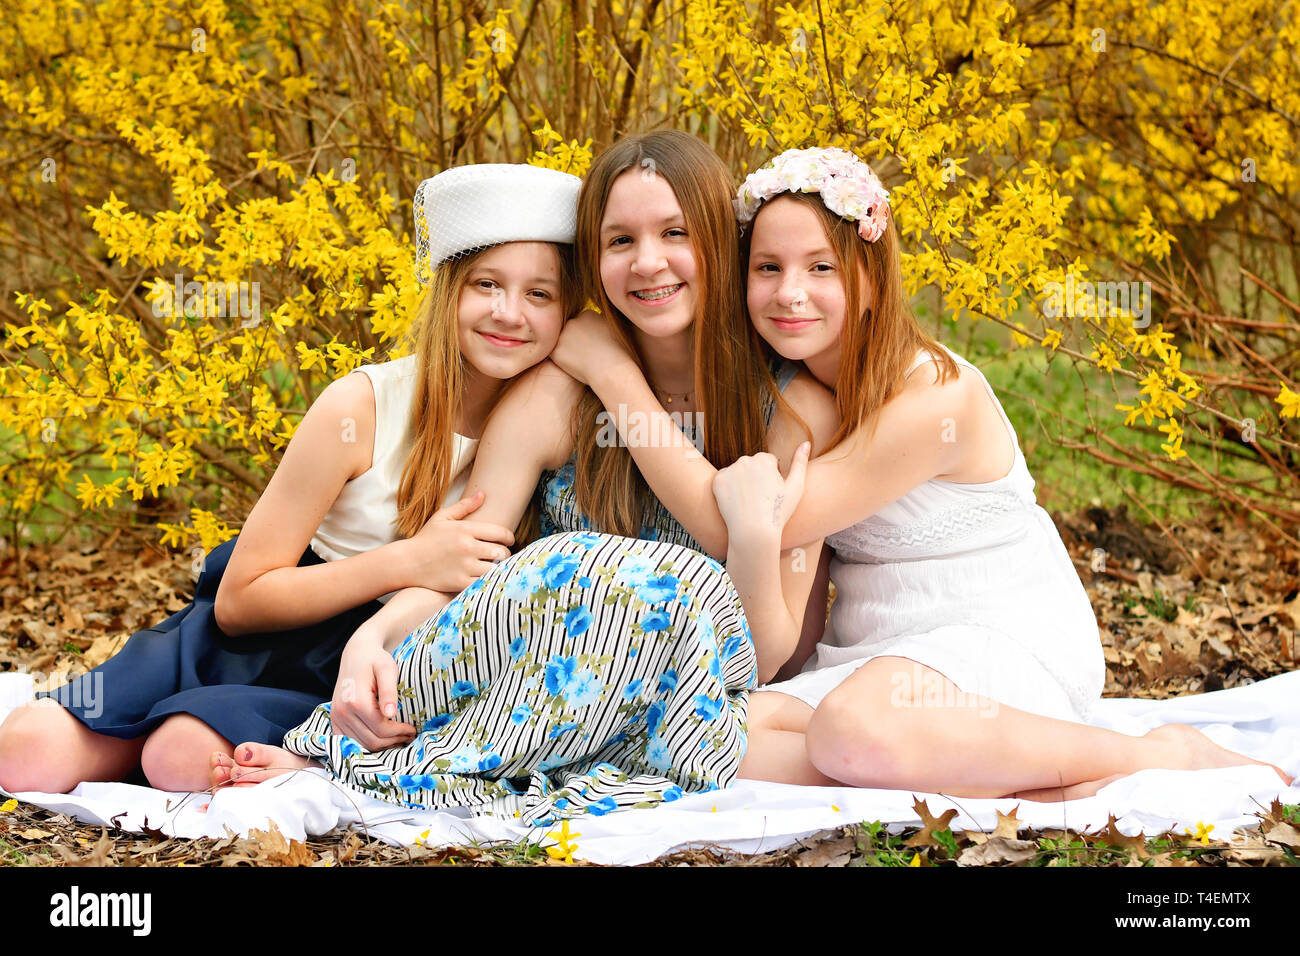 Young girls Spring portrait forsythia backdrop Stock Photo